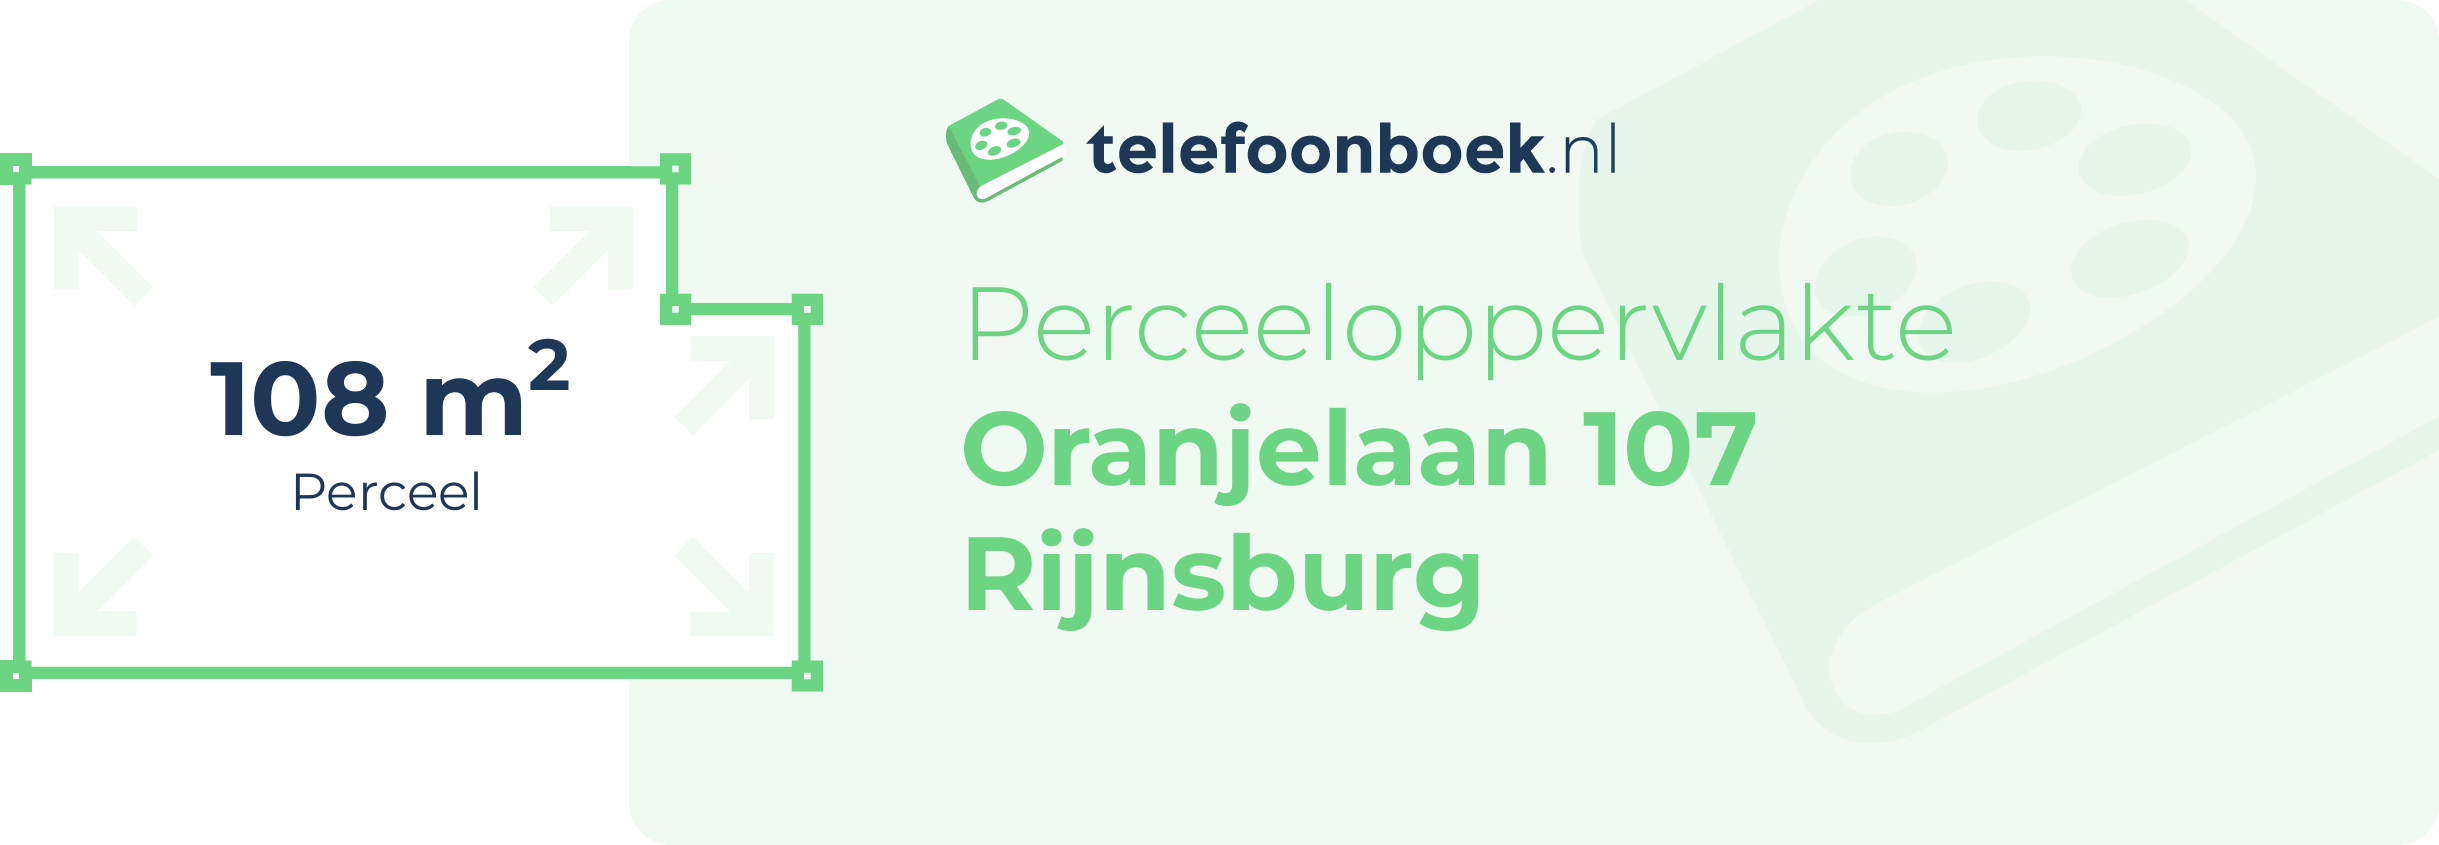 Perceeloppervlakte Oranjelaan 107 Rijnsburg